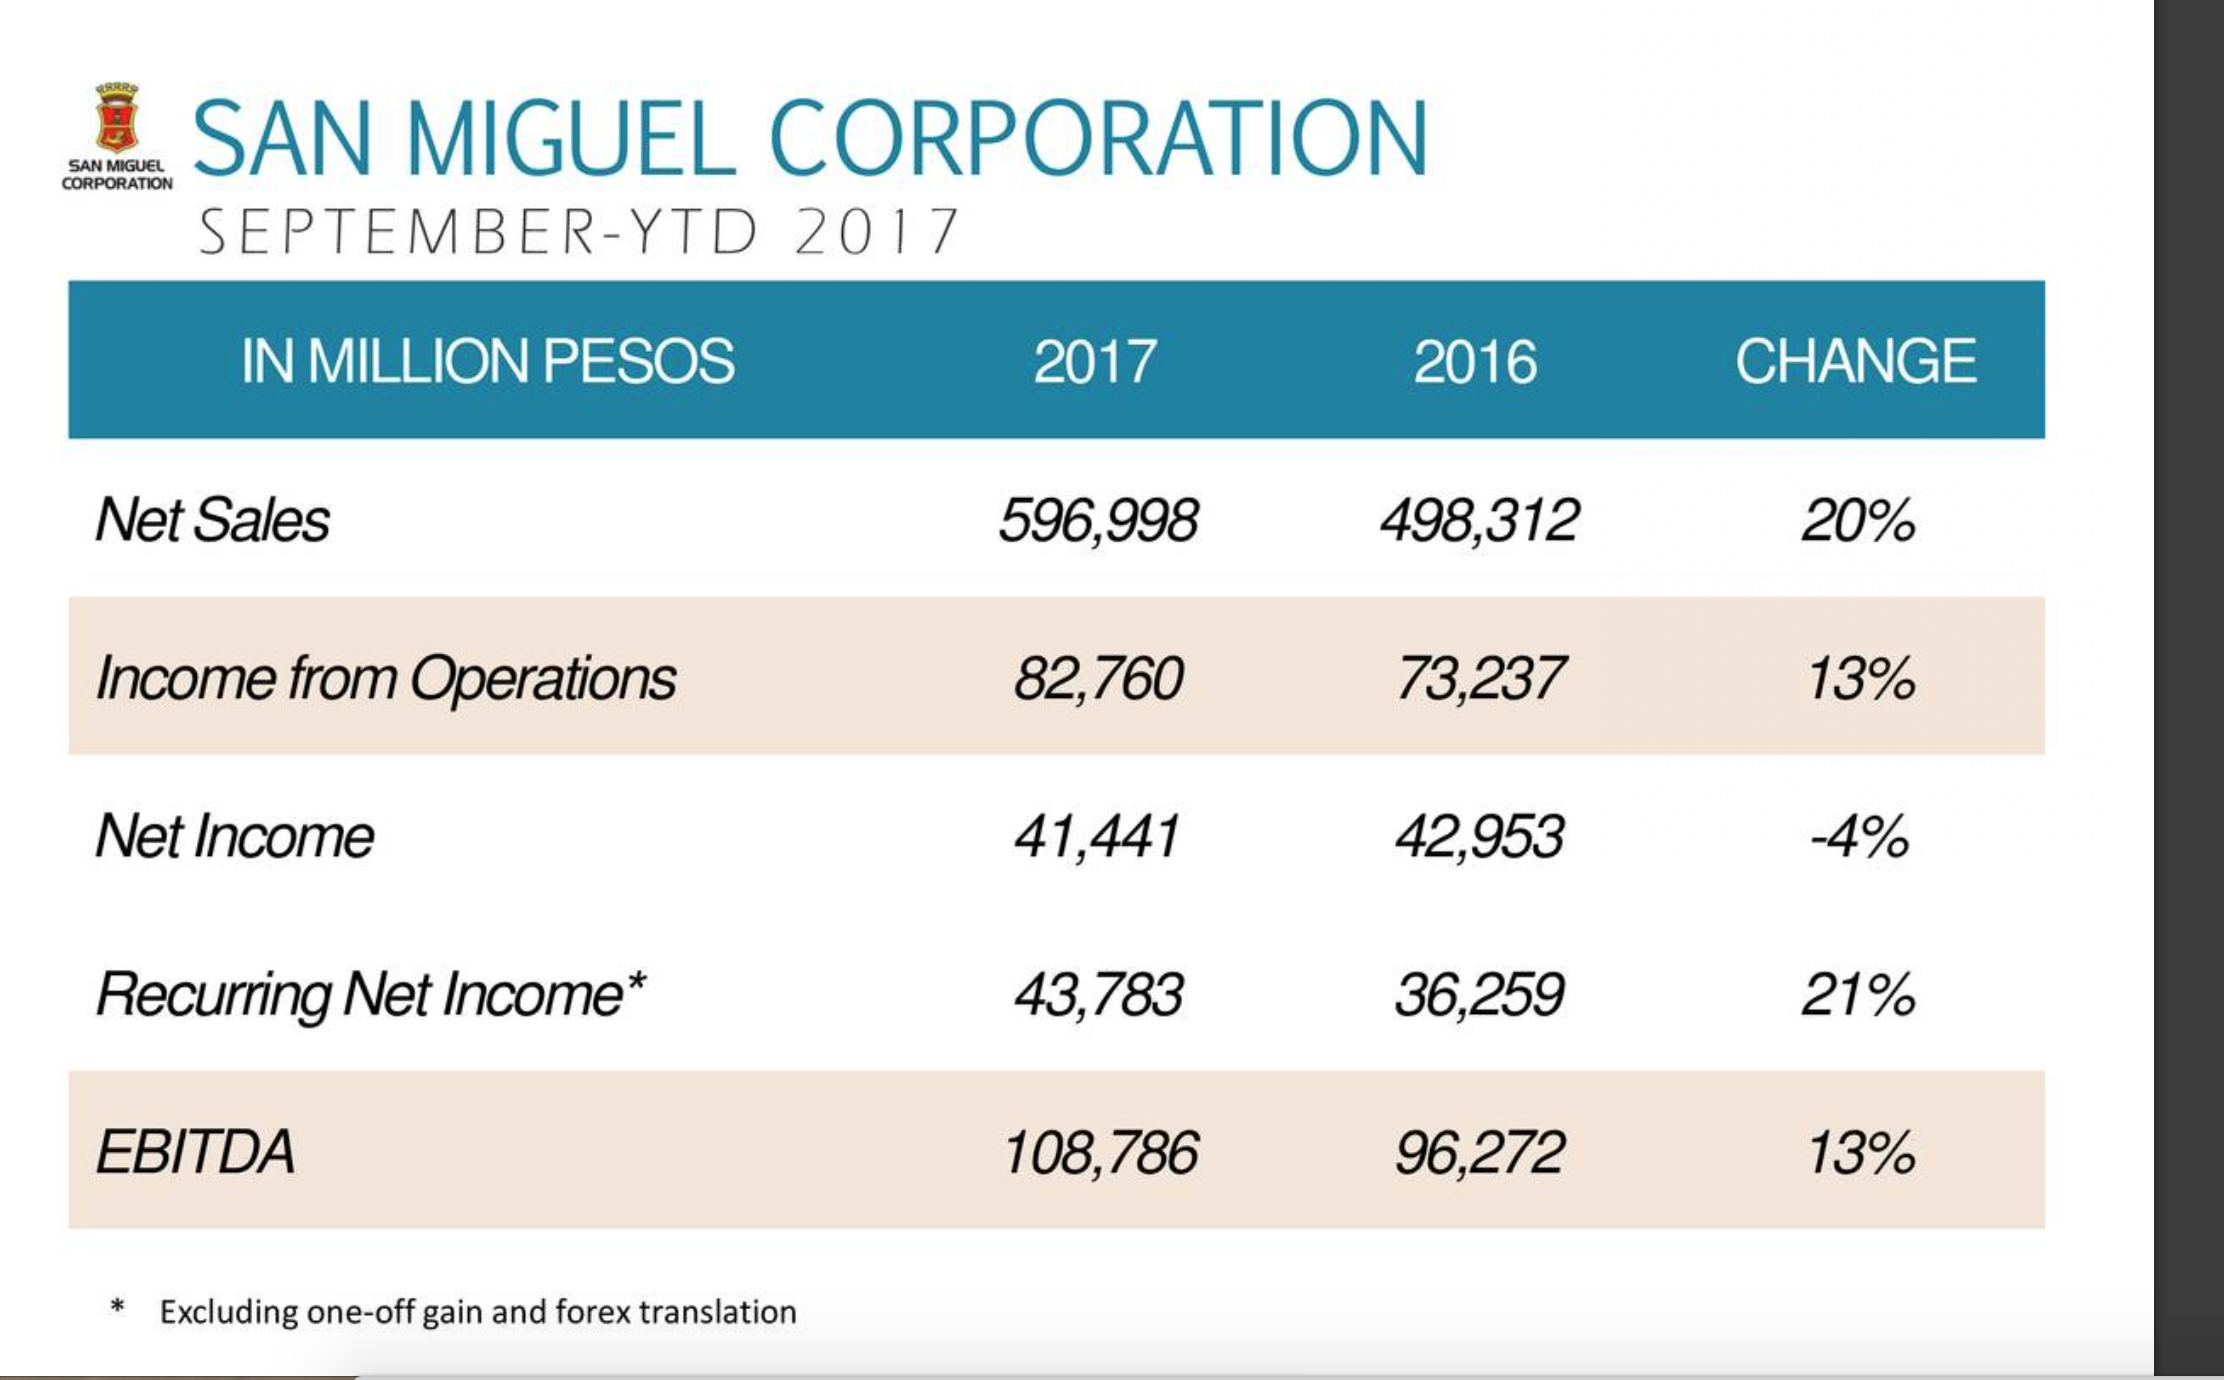 San Miguel Corporation Organizational Chart